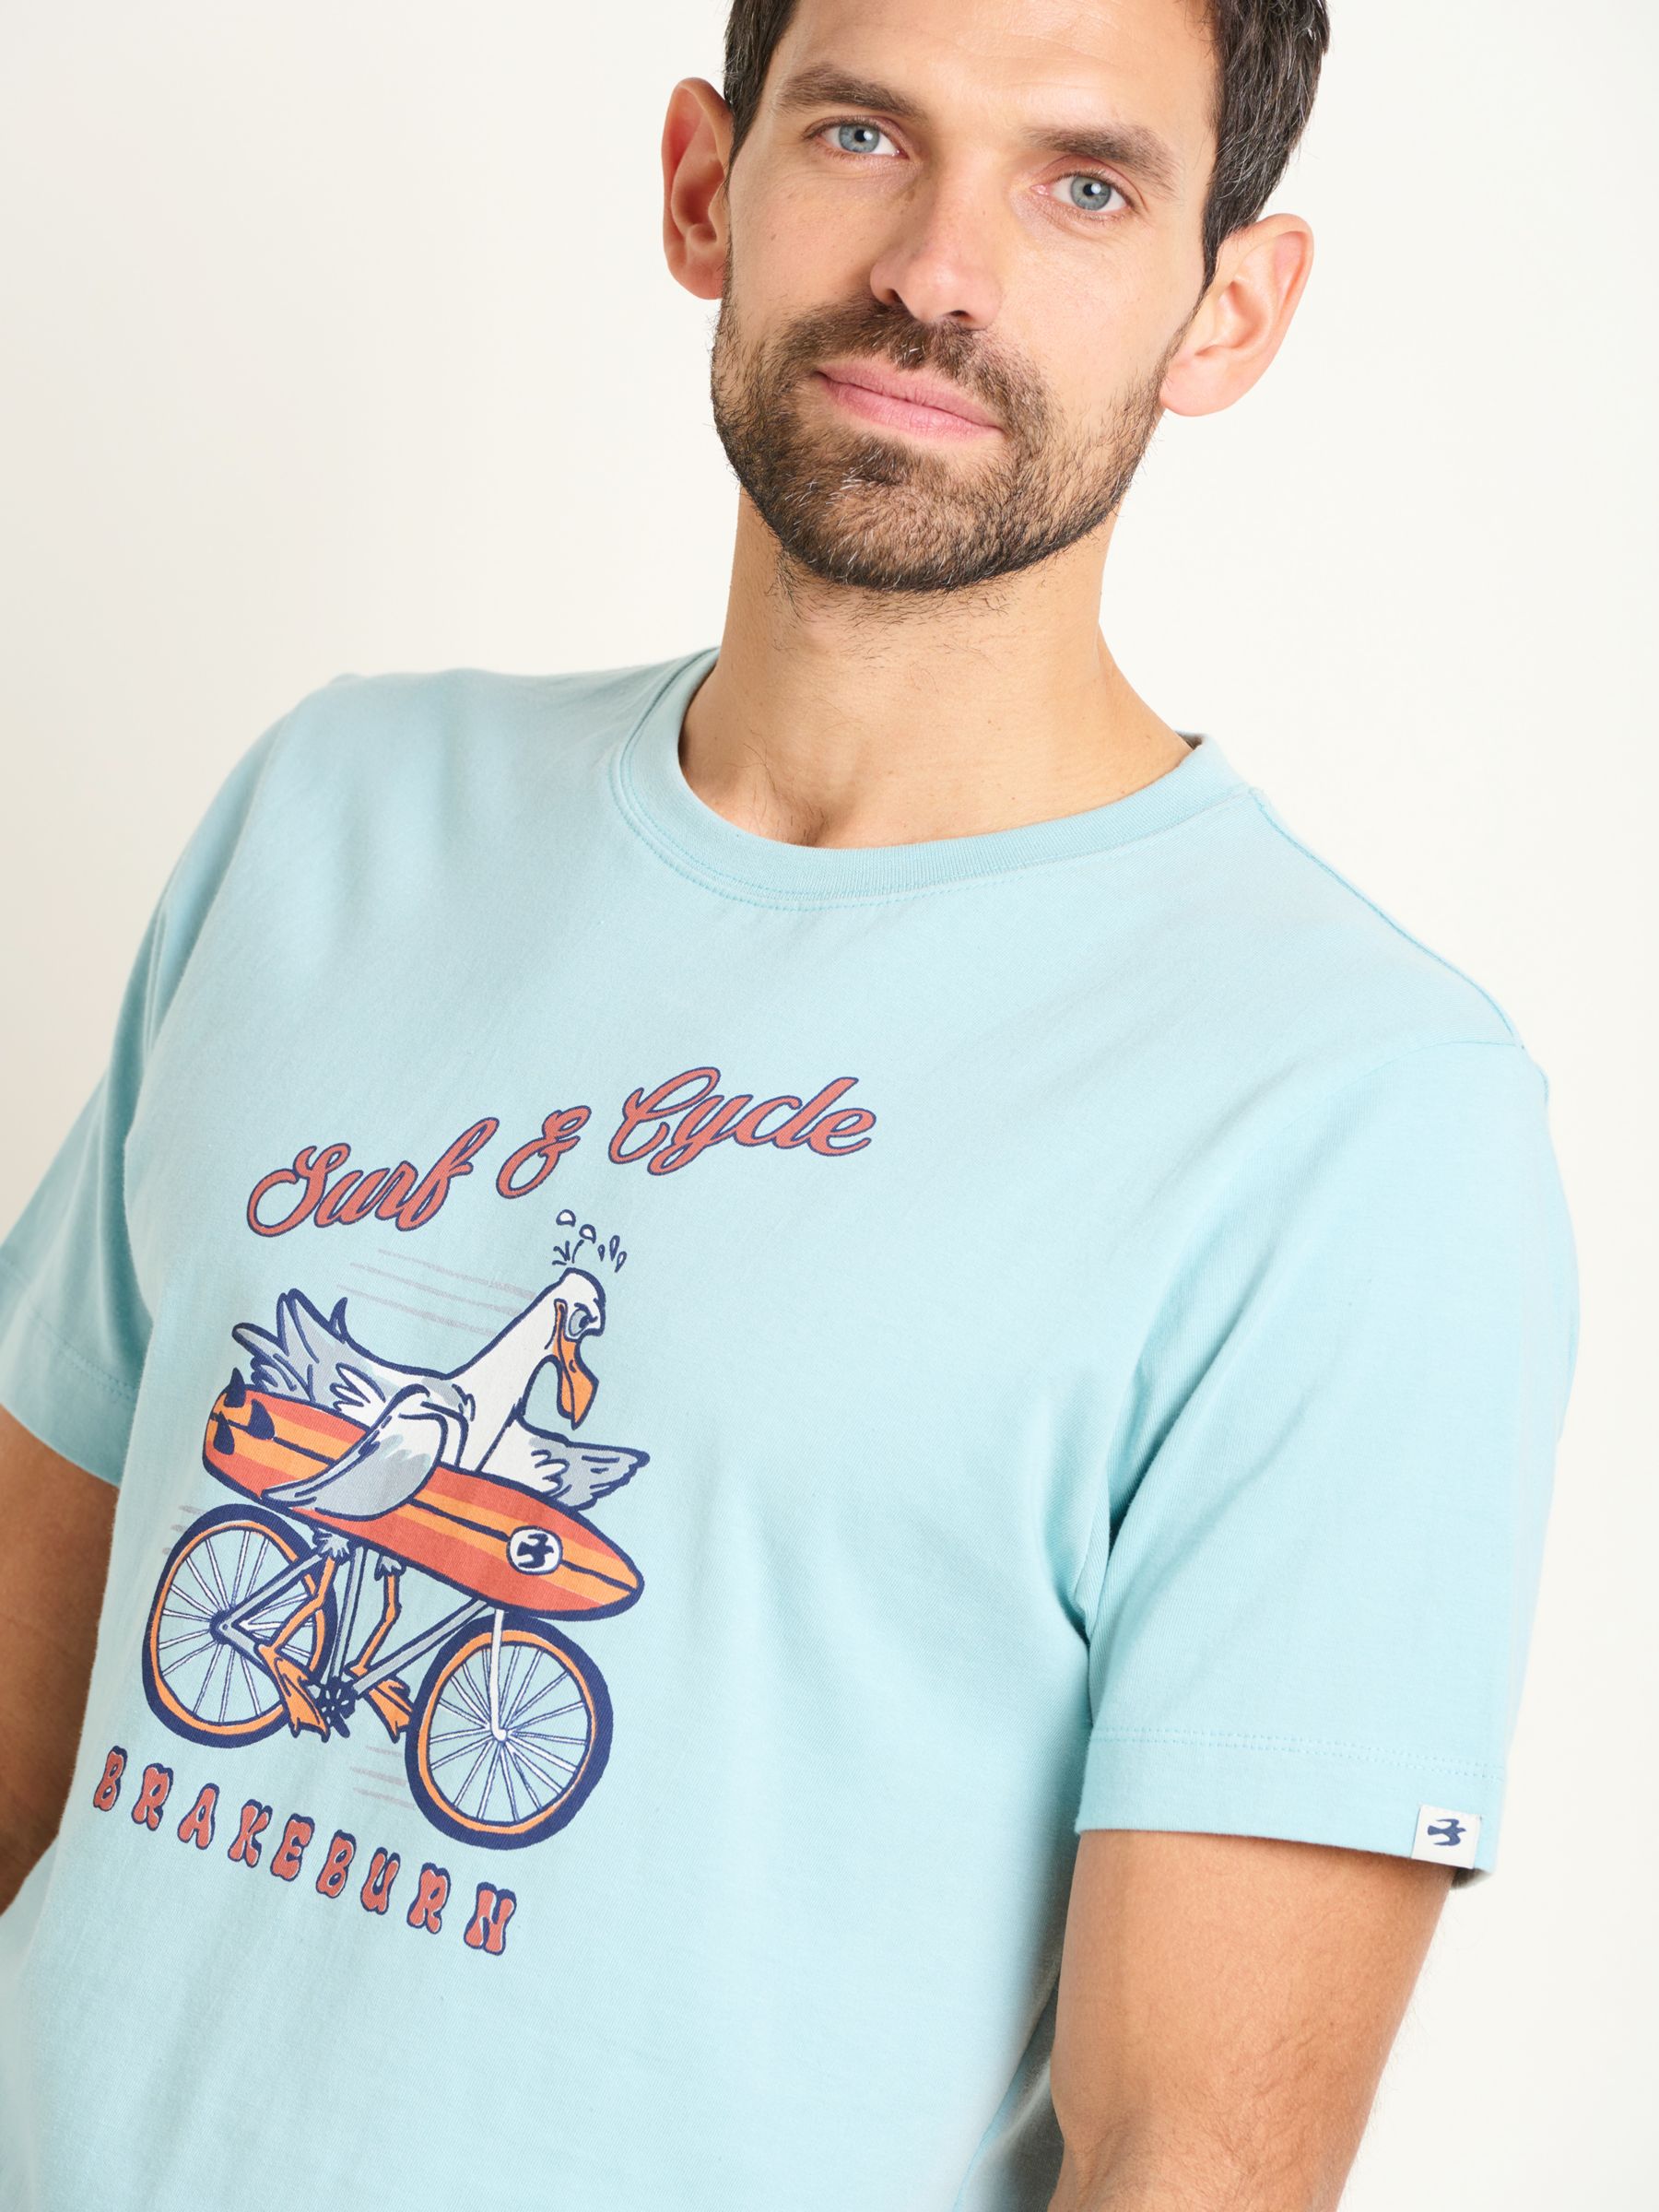 Brakeburn Seagul Graphic T-Shirt, Blue, XXL